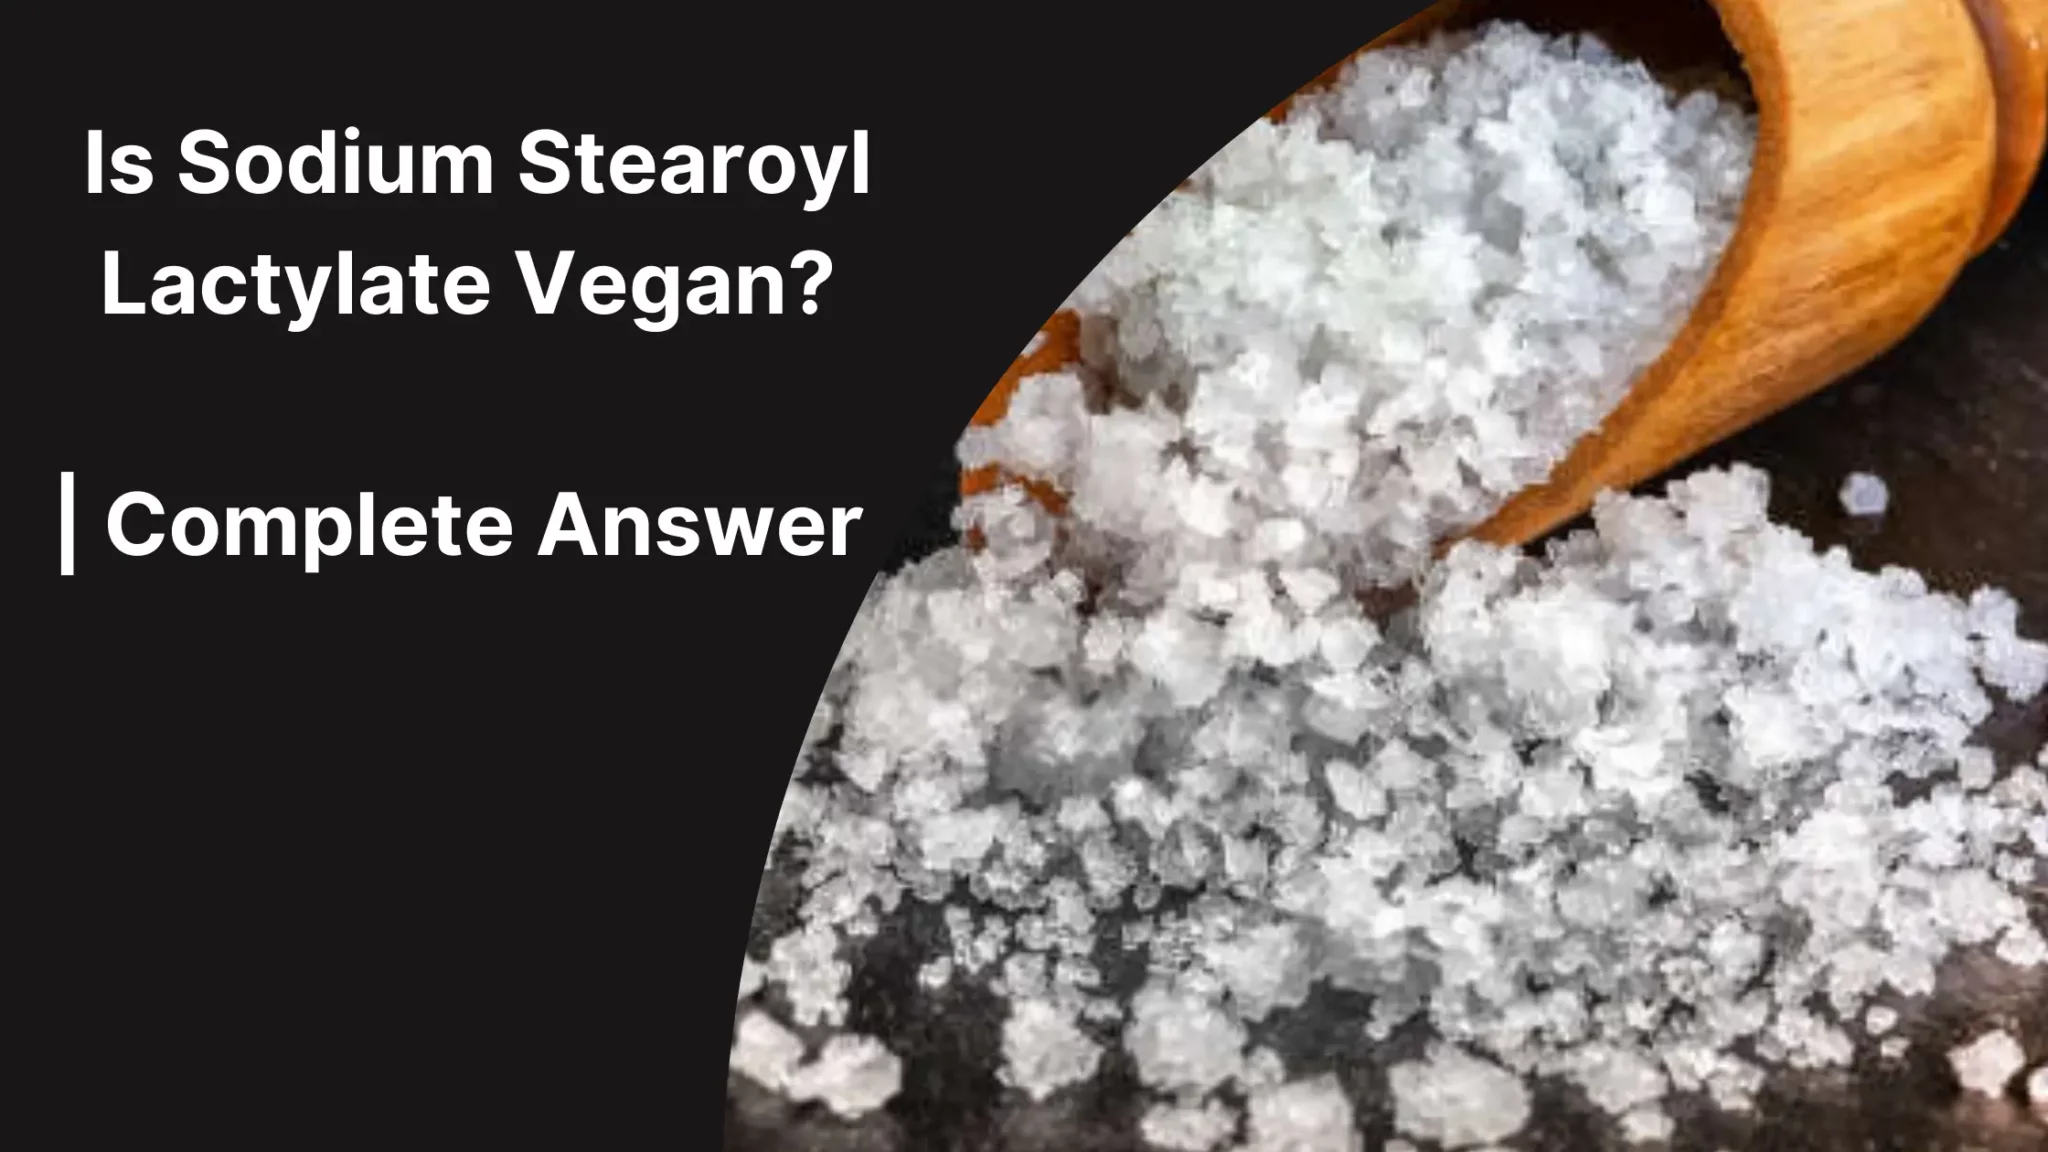 Is Sodium Stearoyl Lactylate Vegan?